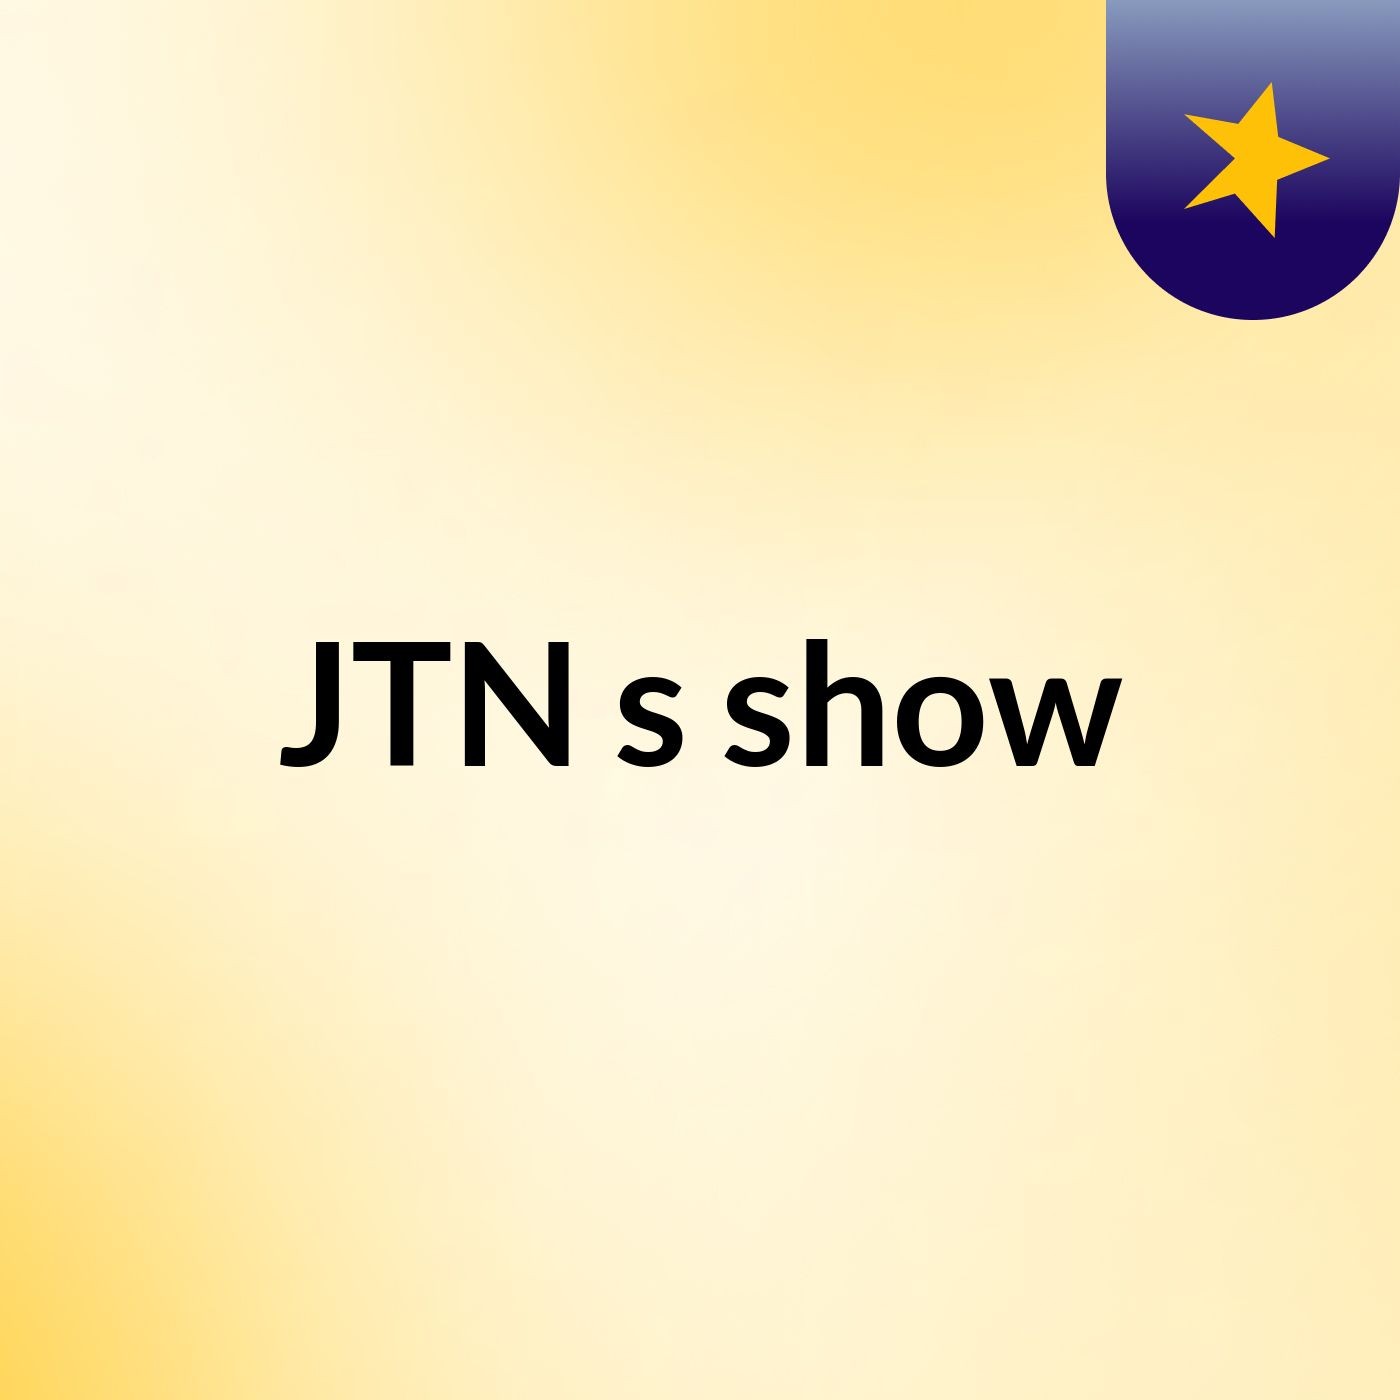 JTN's show